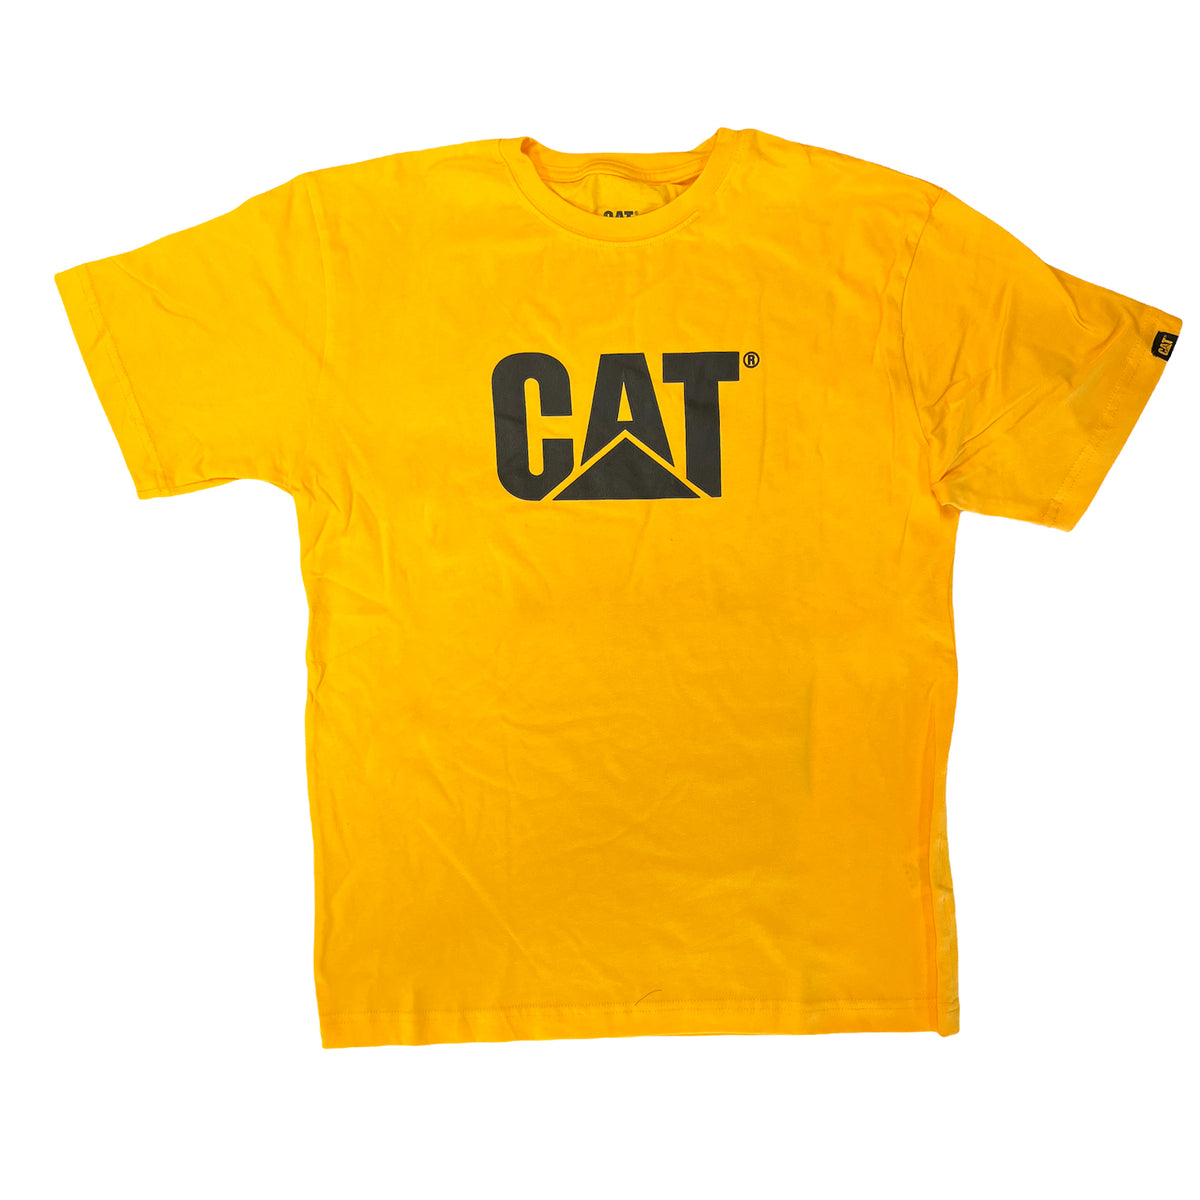 CAT Trademark Banner Short Sleeve Work T-Shirt - Black 1510305